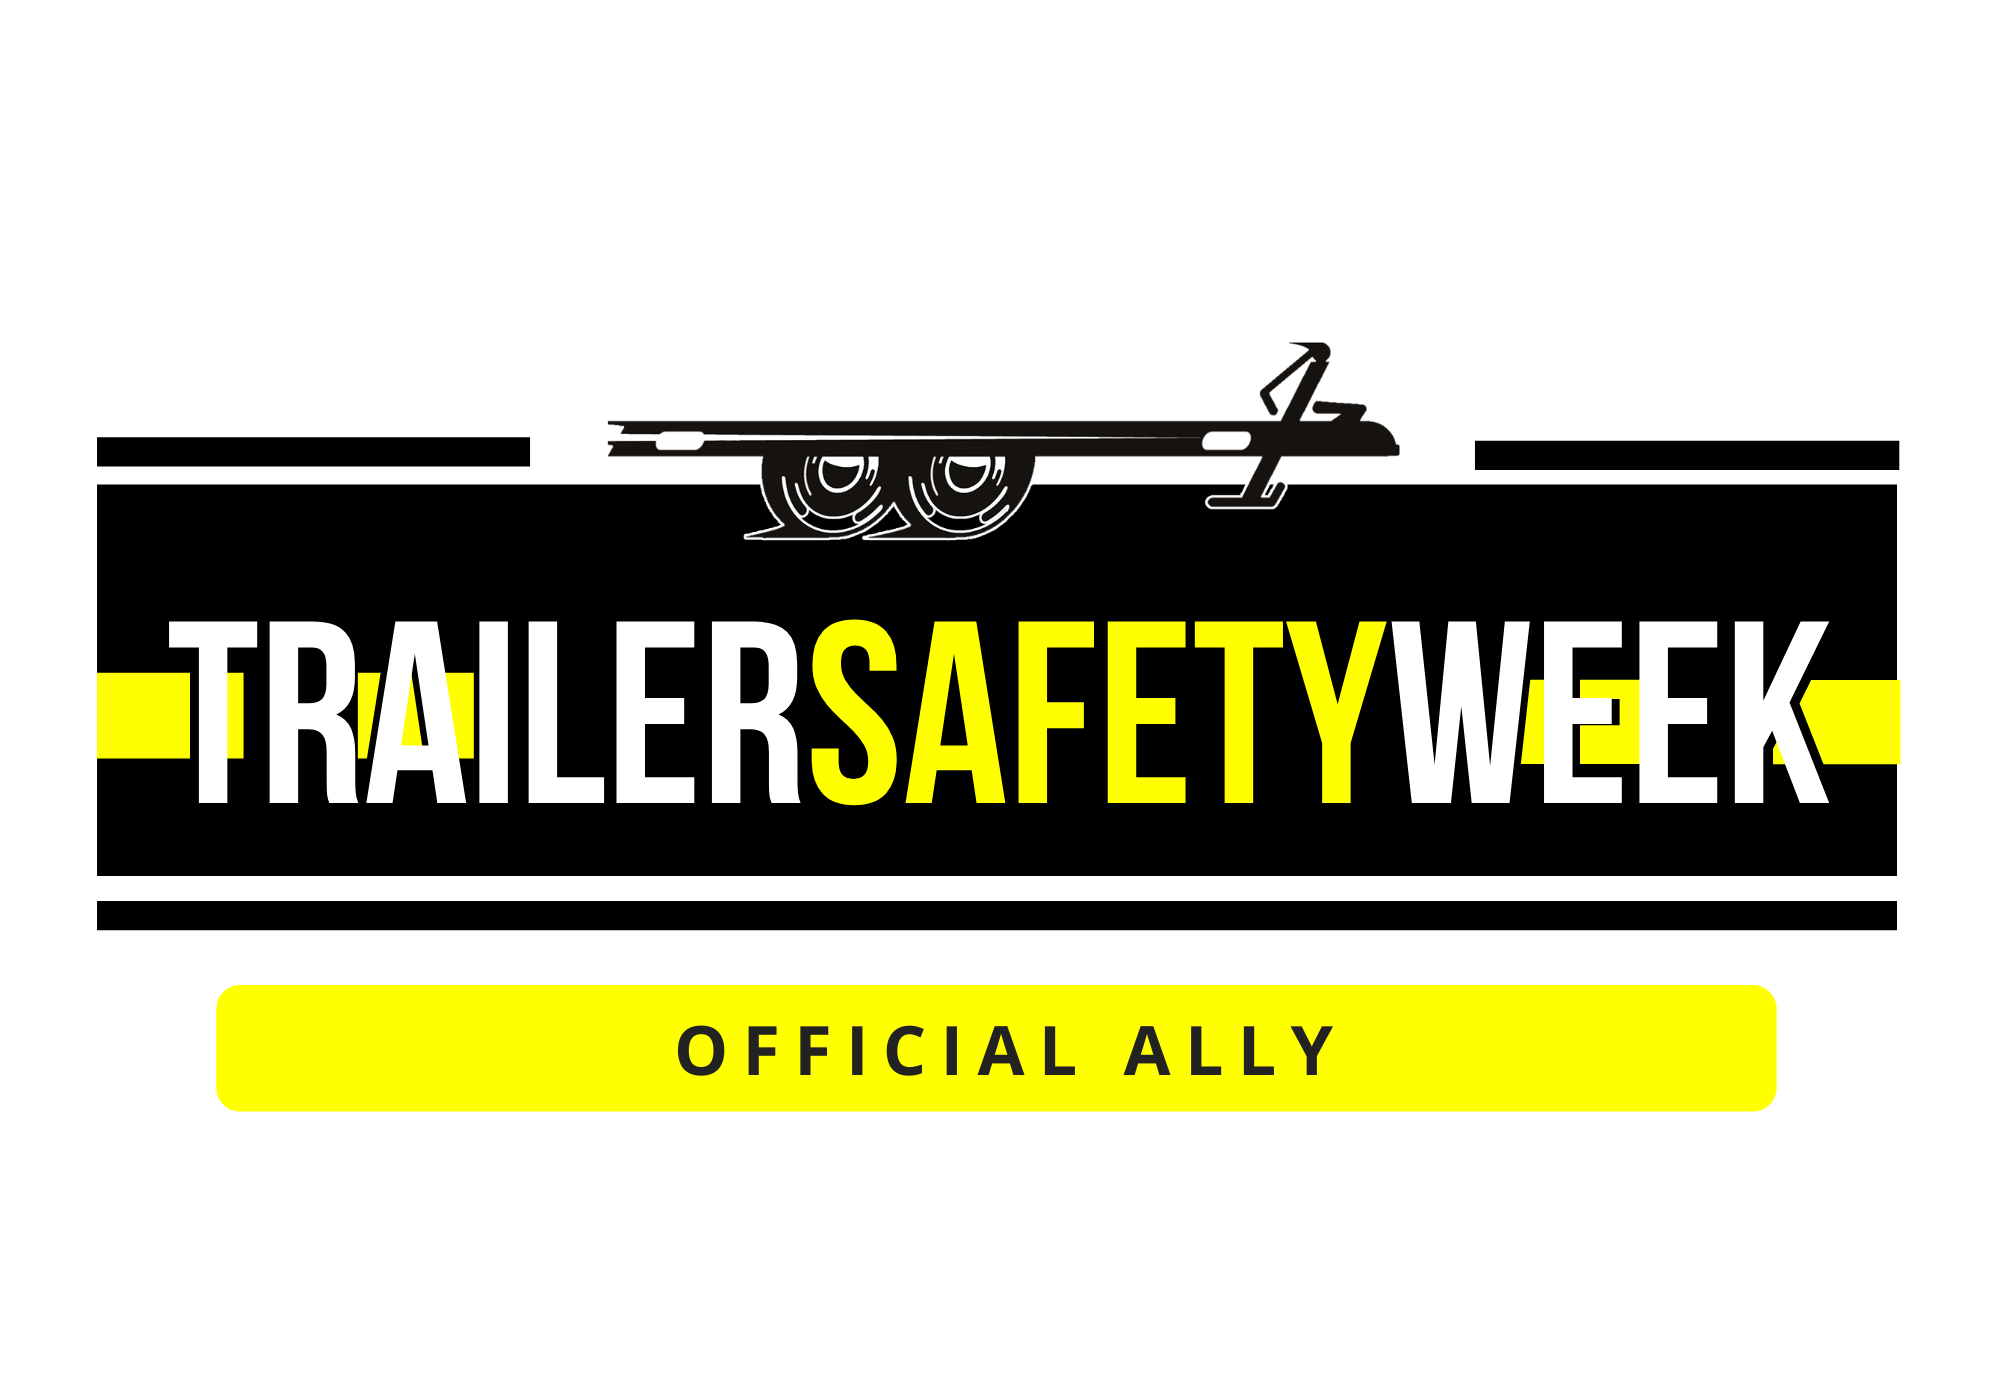 Trailer Safety Week Ally